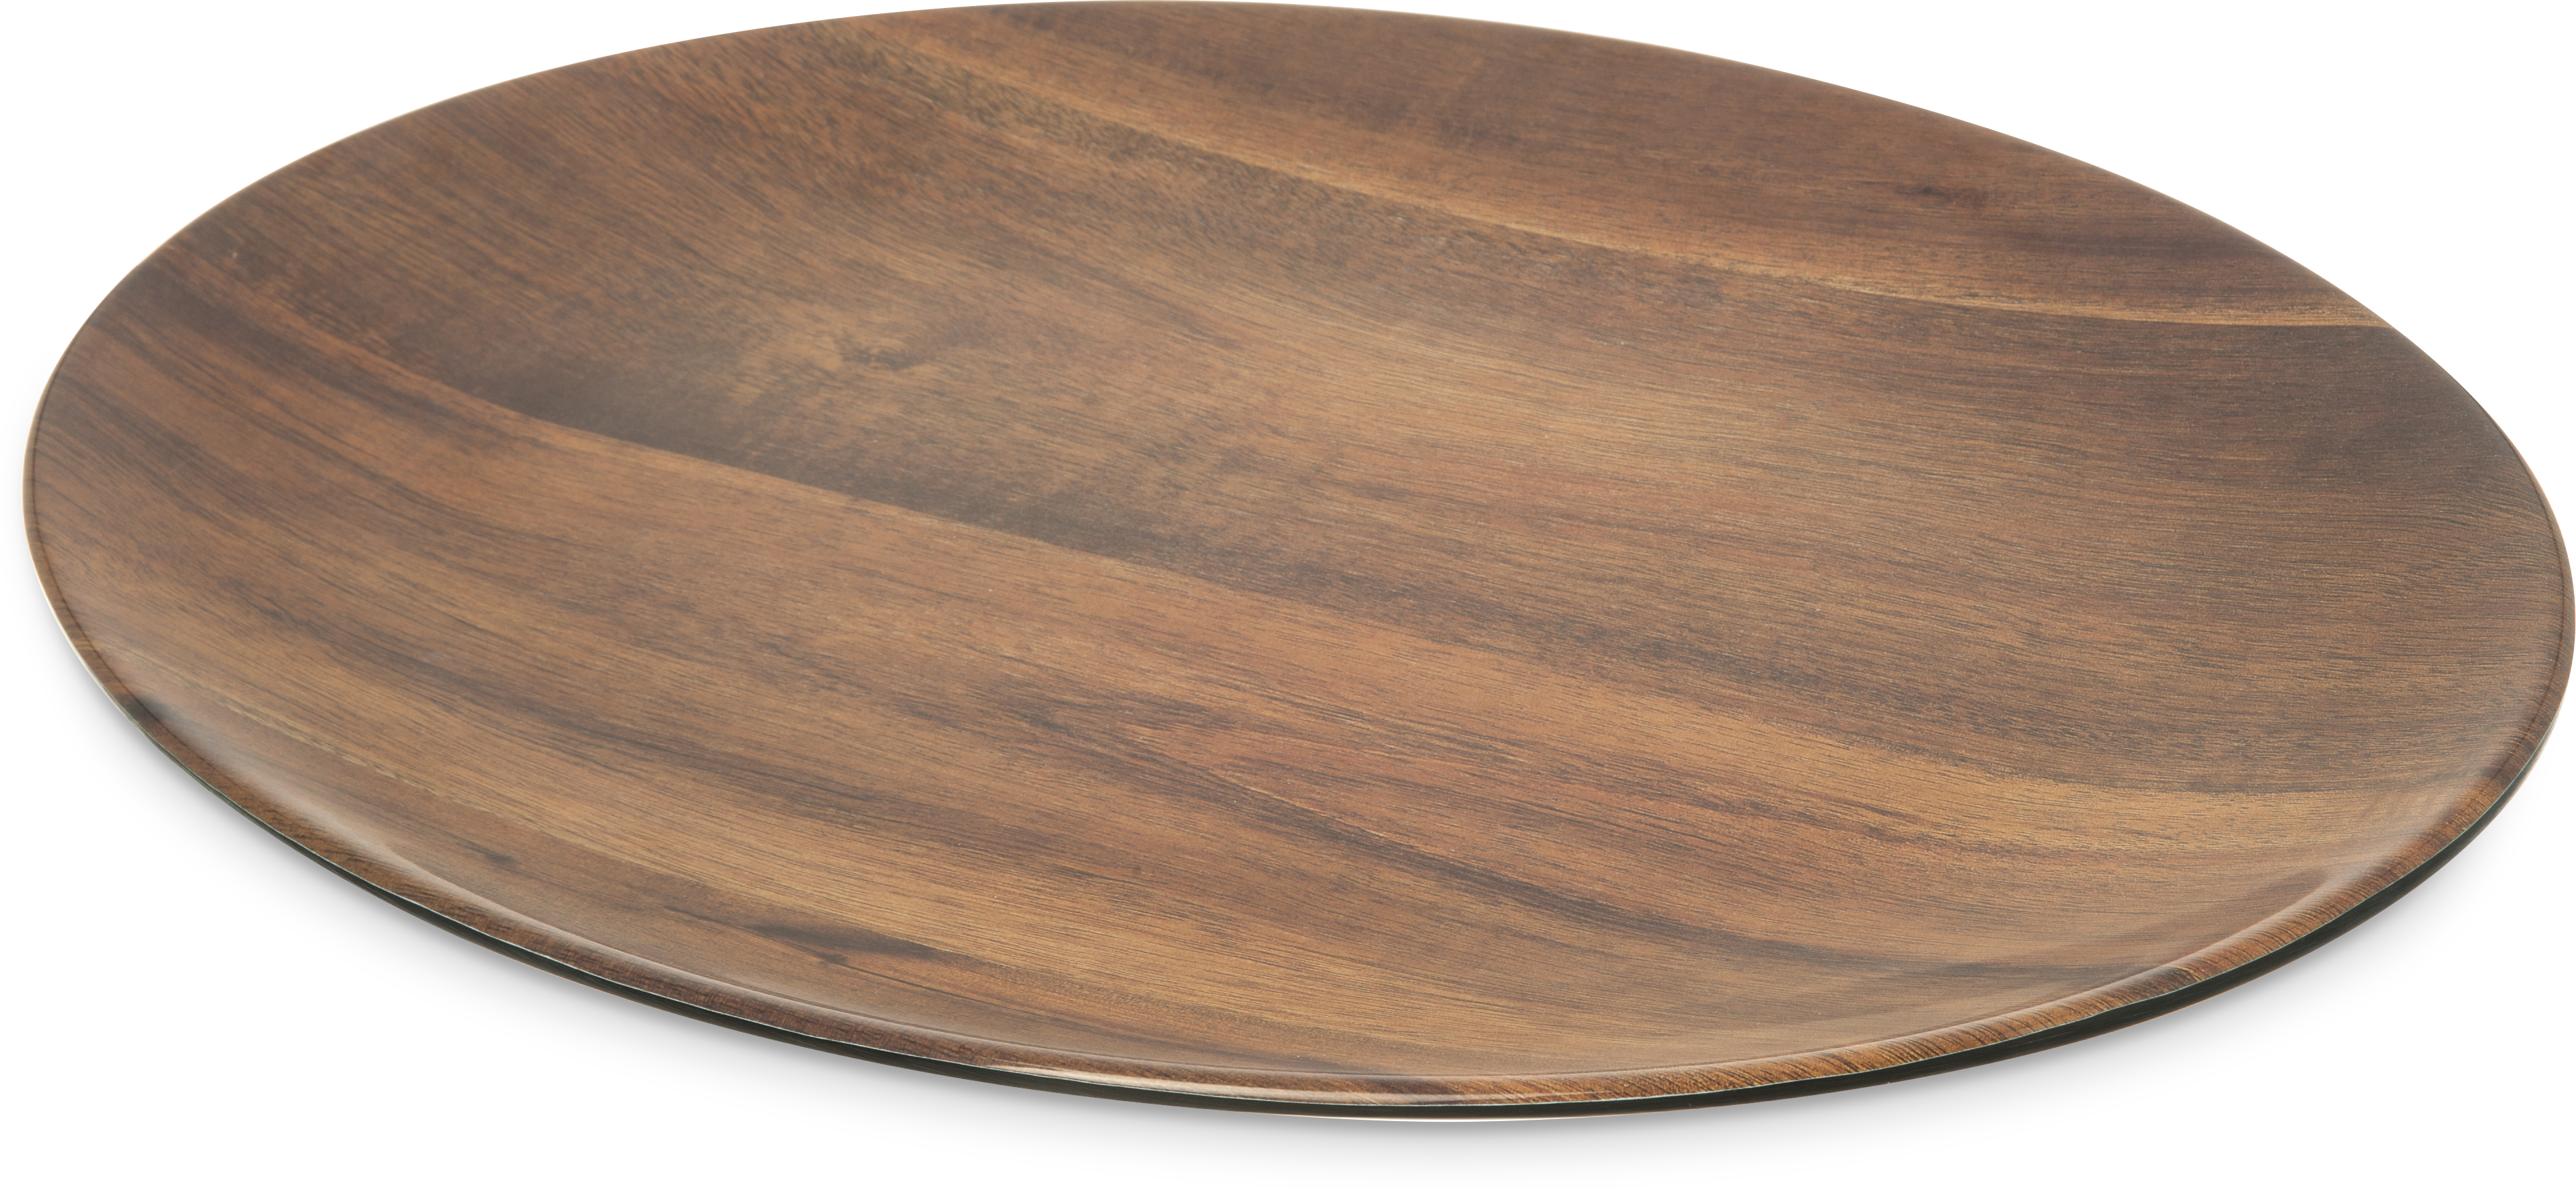 Epicure Acacia Grain Oval Platter 18 x 15 - Dark Woodgrain